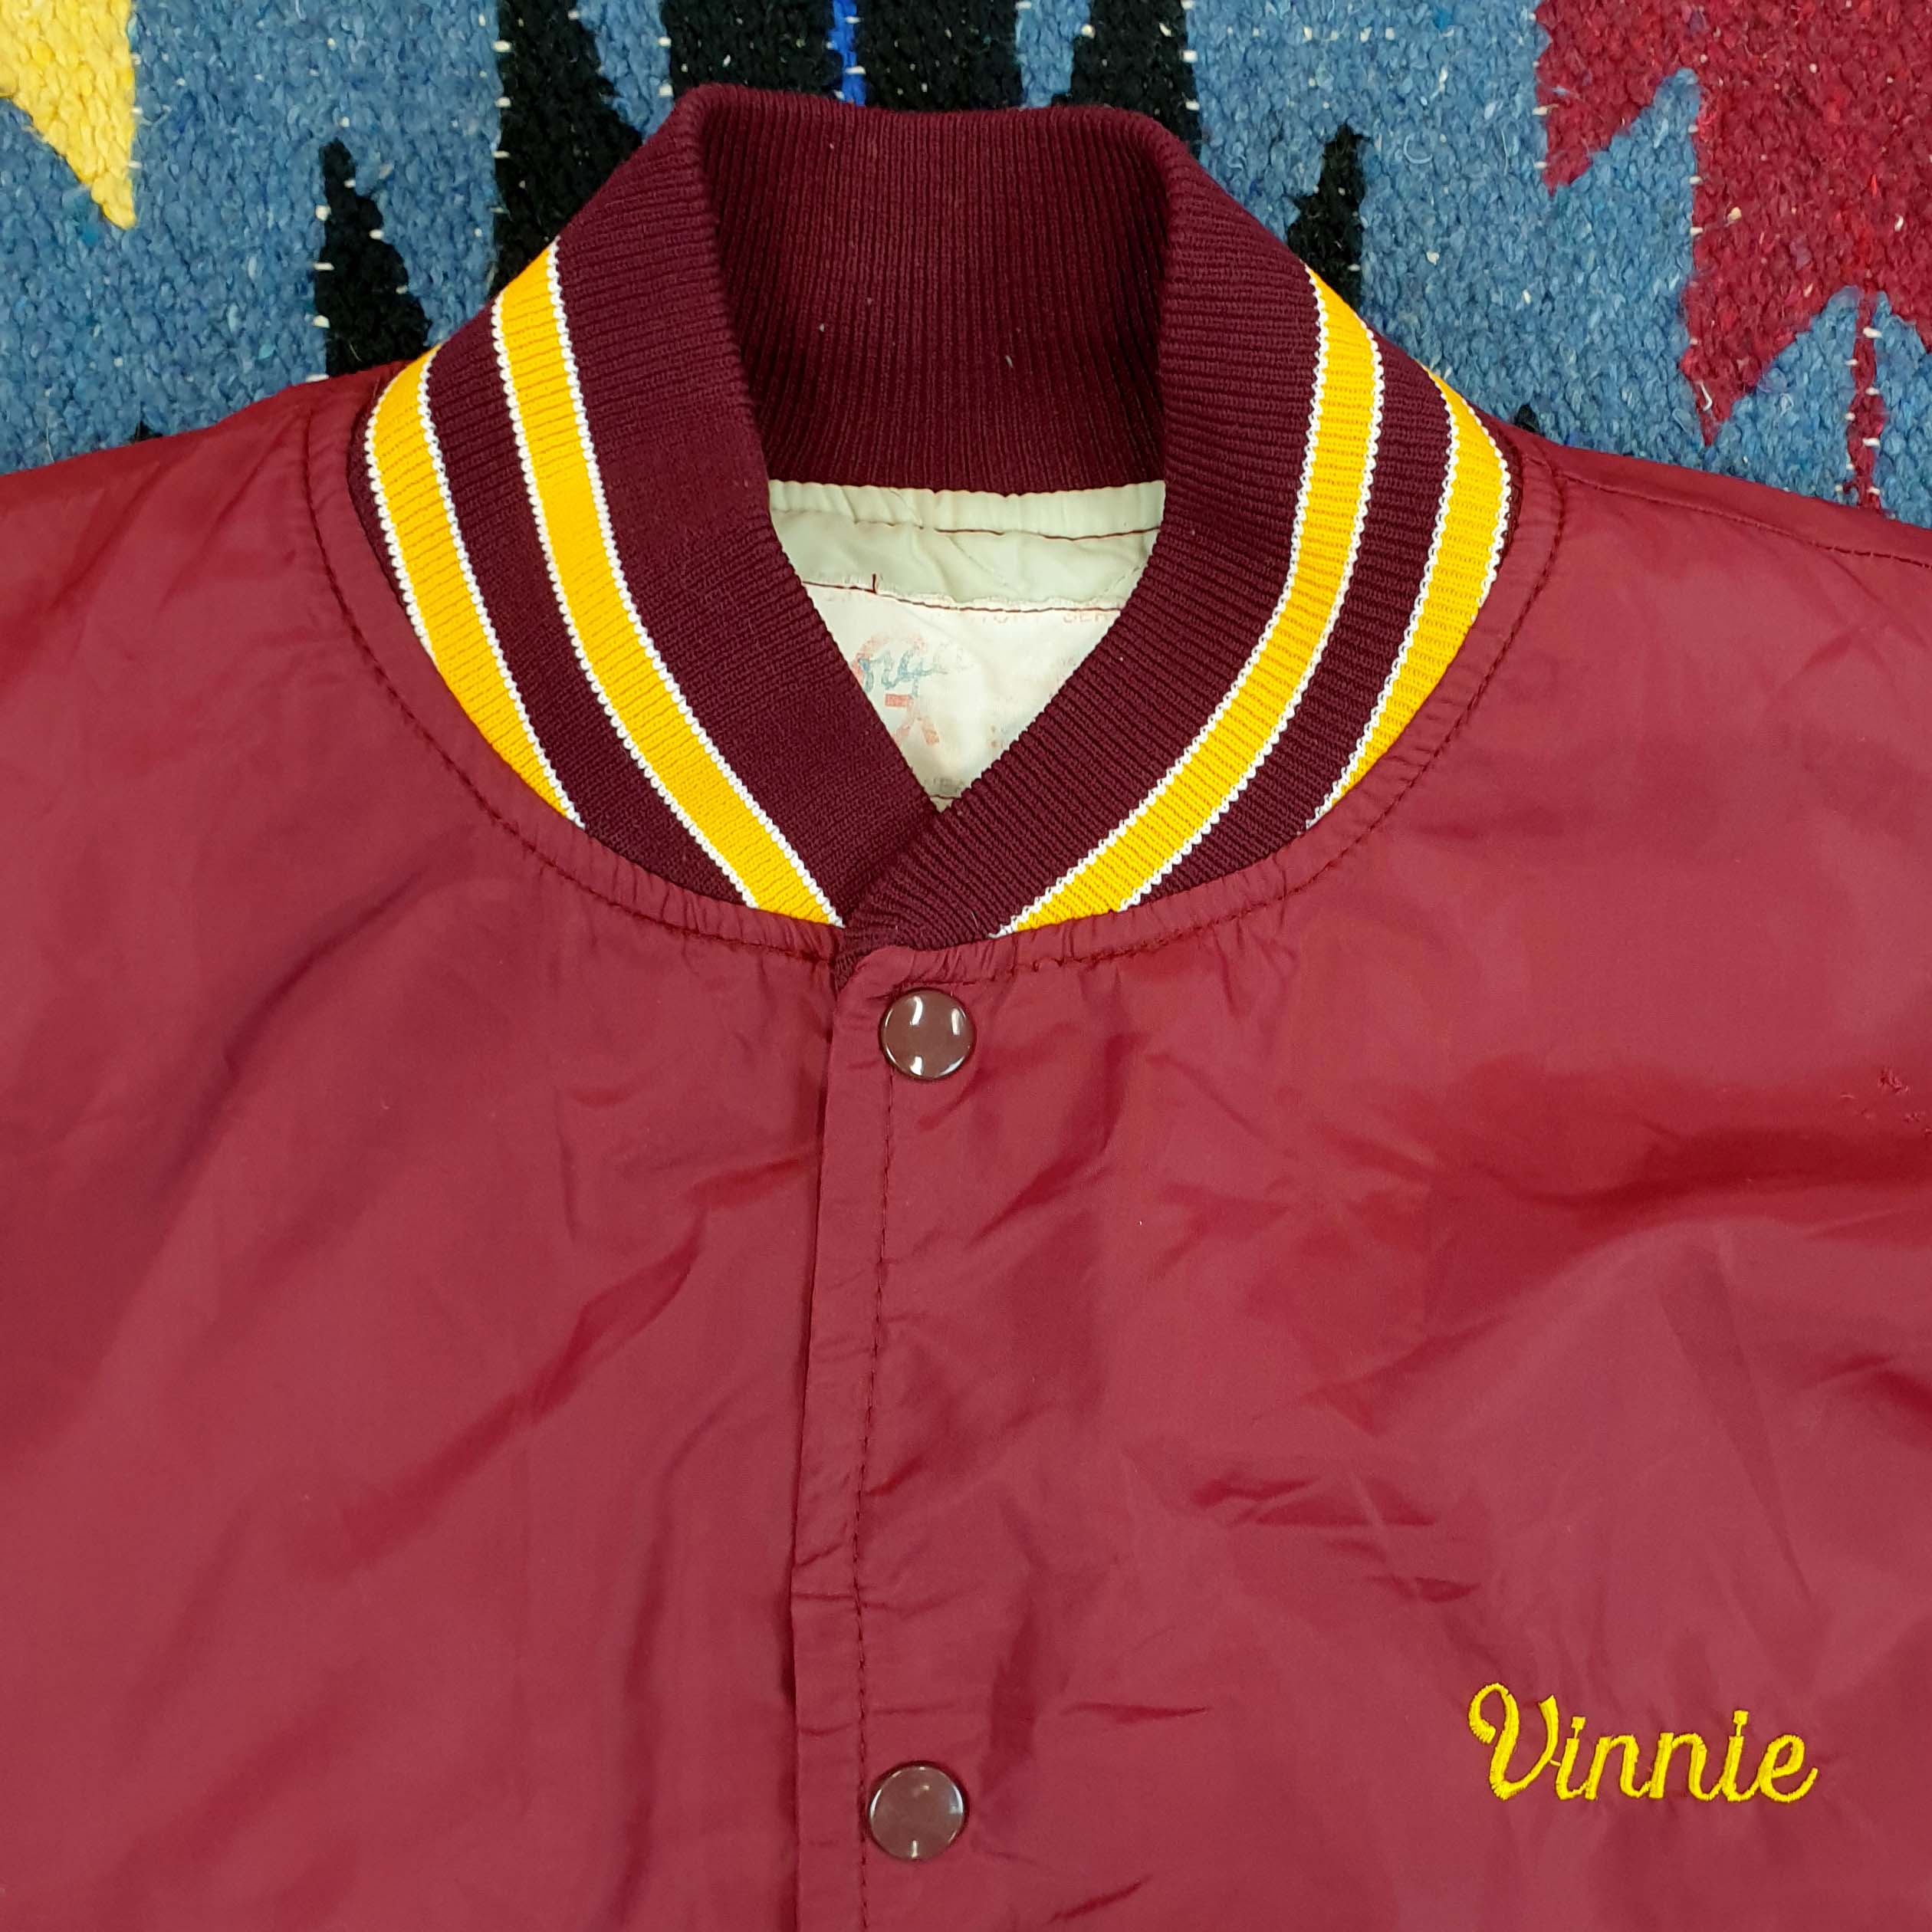 Fordham Rams Football (Vinnie) Varsity Jacket